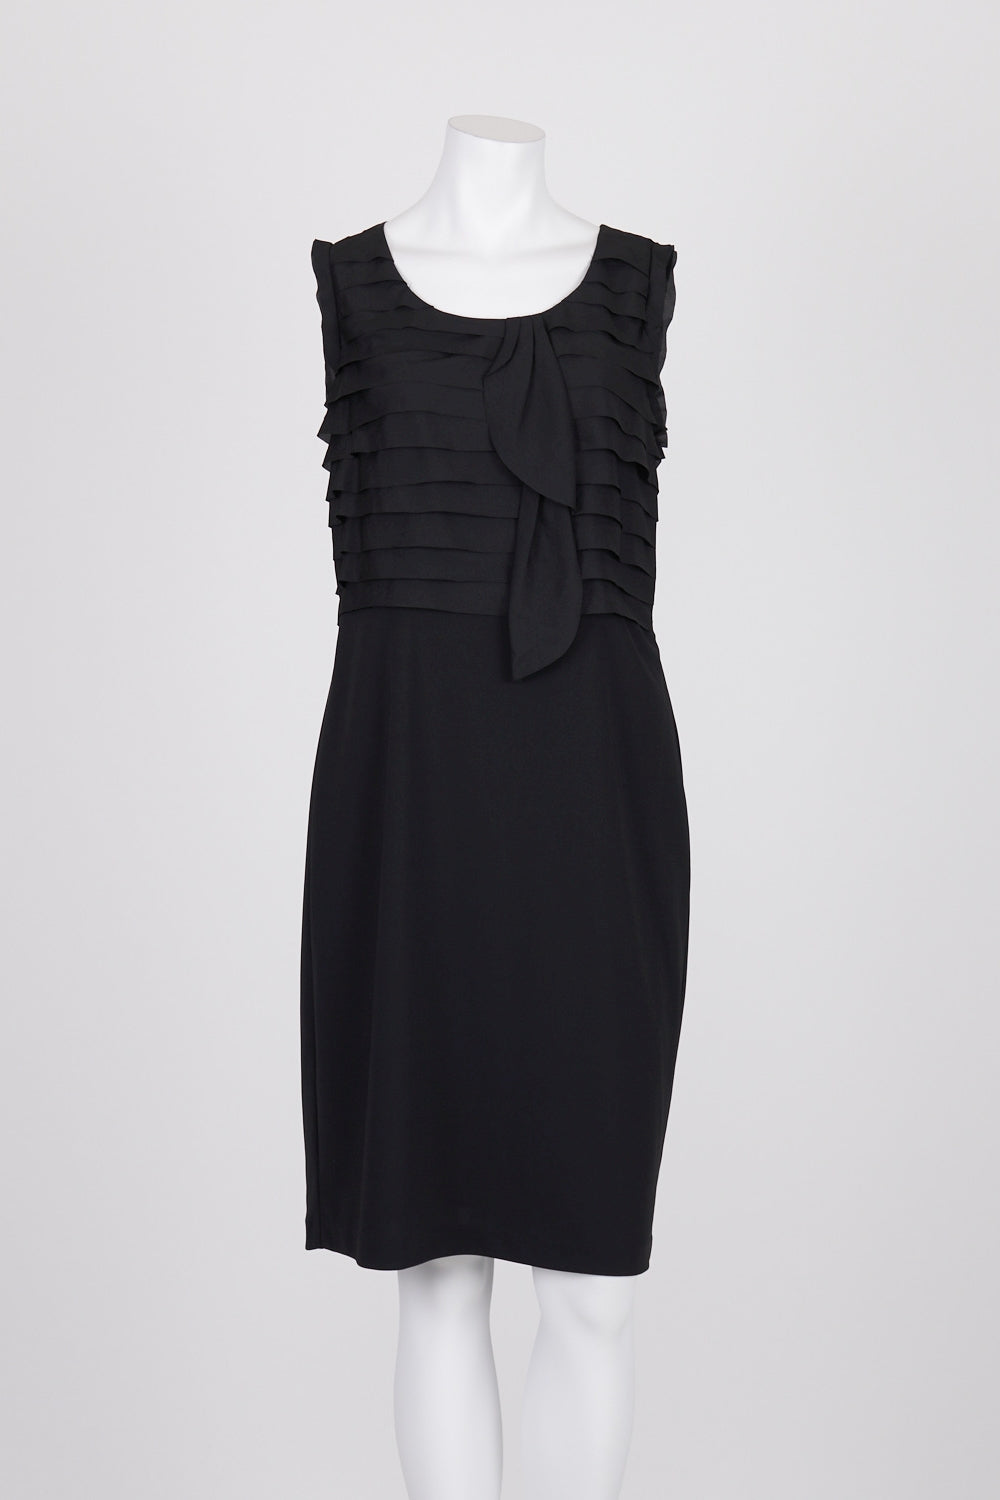 Gallery Black Layered Sleeveless Dress 12 